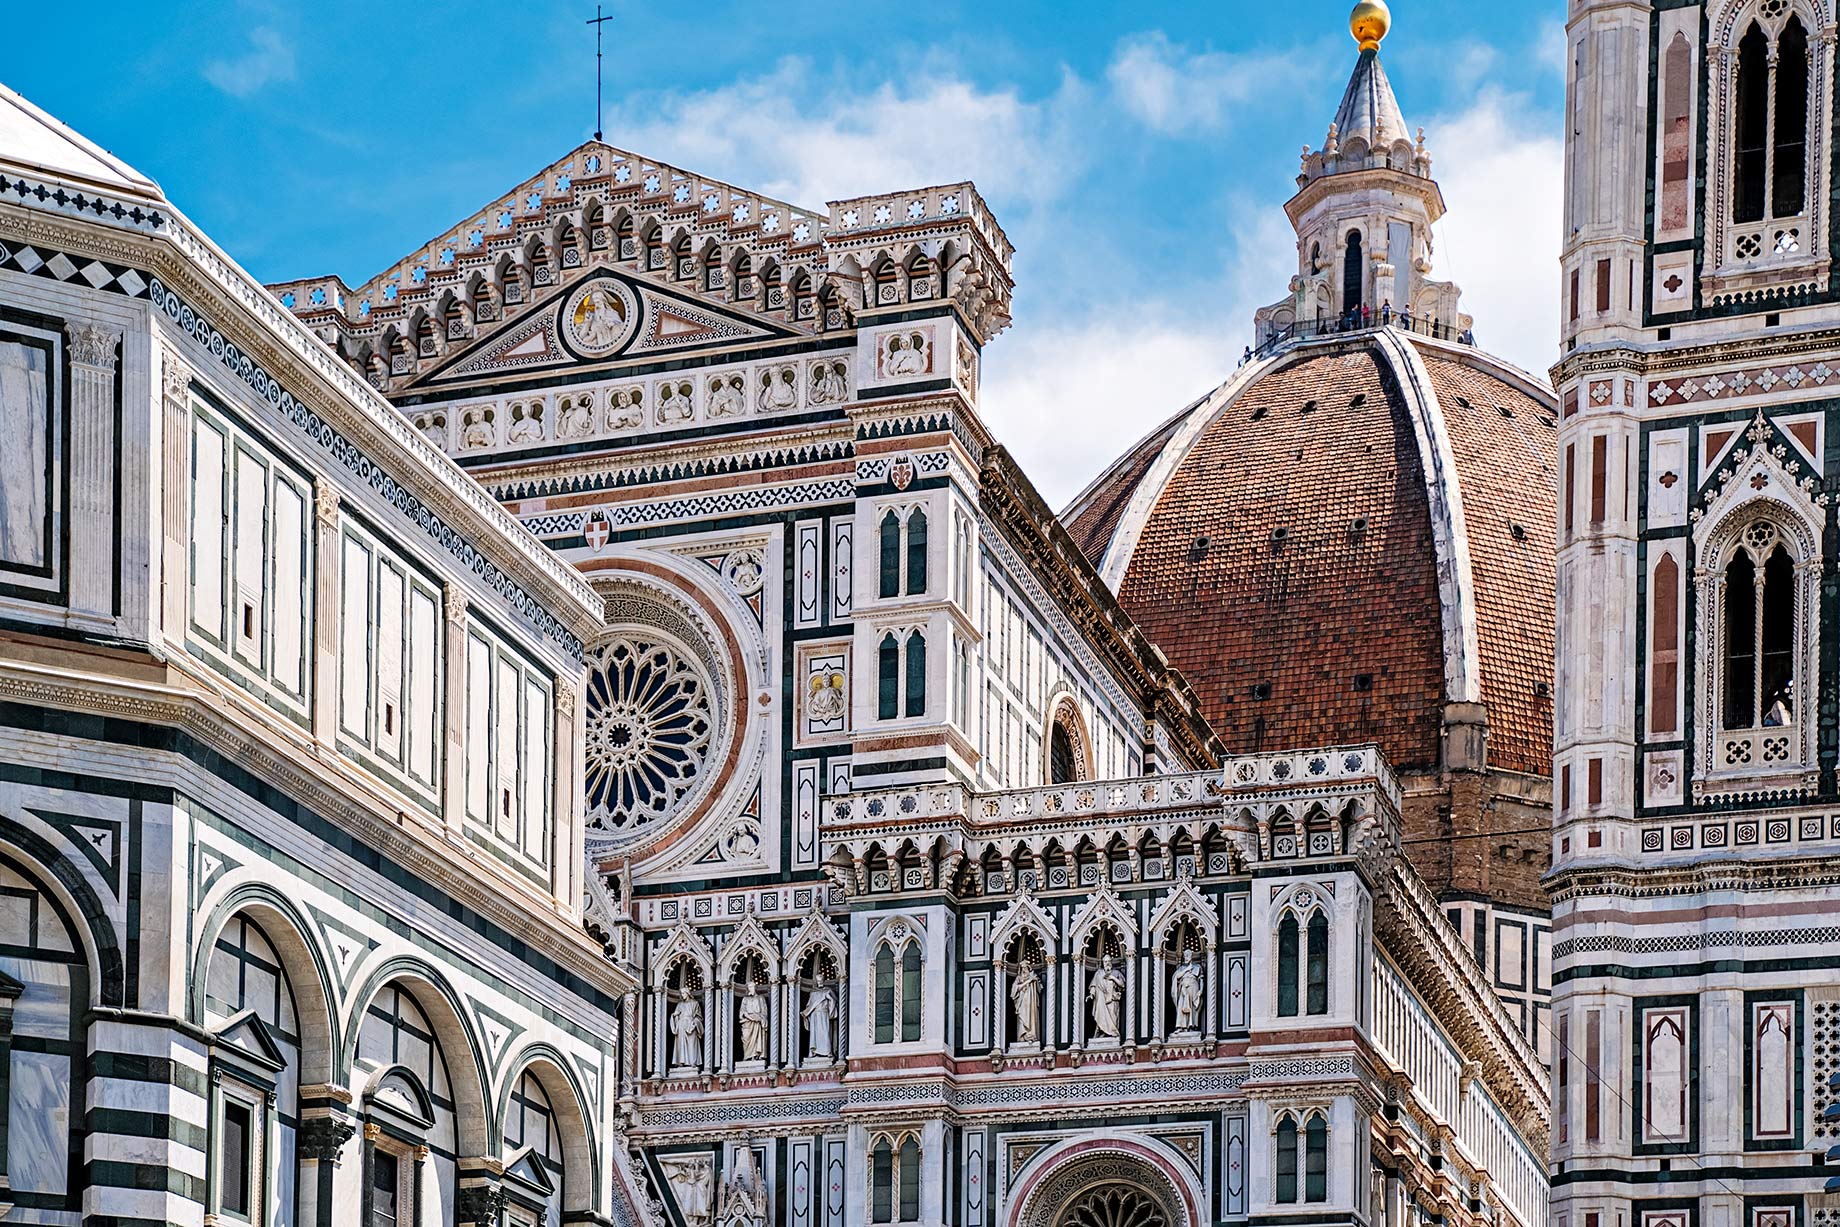 Santa Maria del Fiore Cathedral - Piazza del Duomo - Florence, Italy